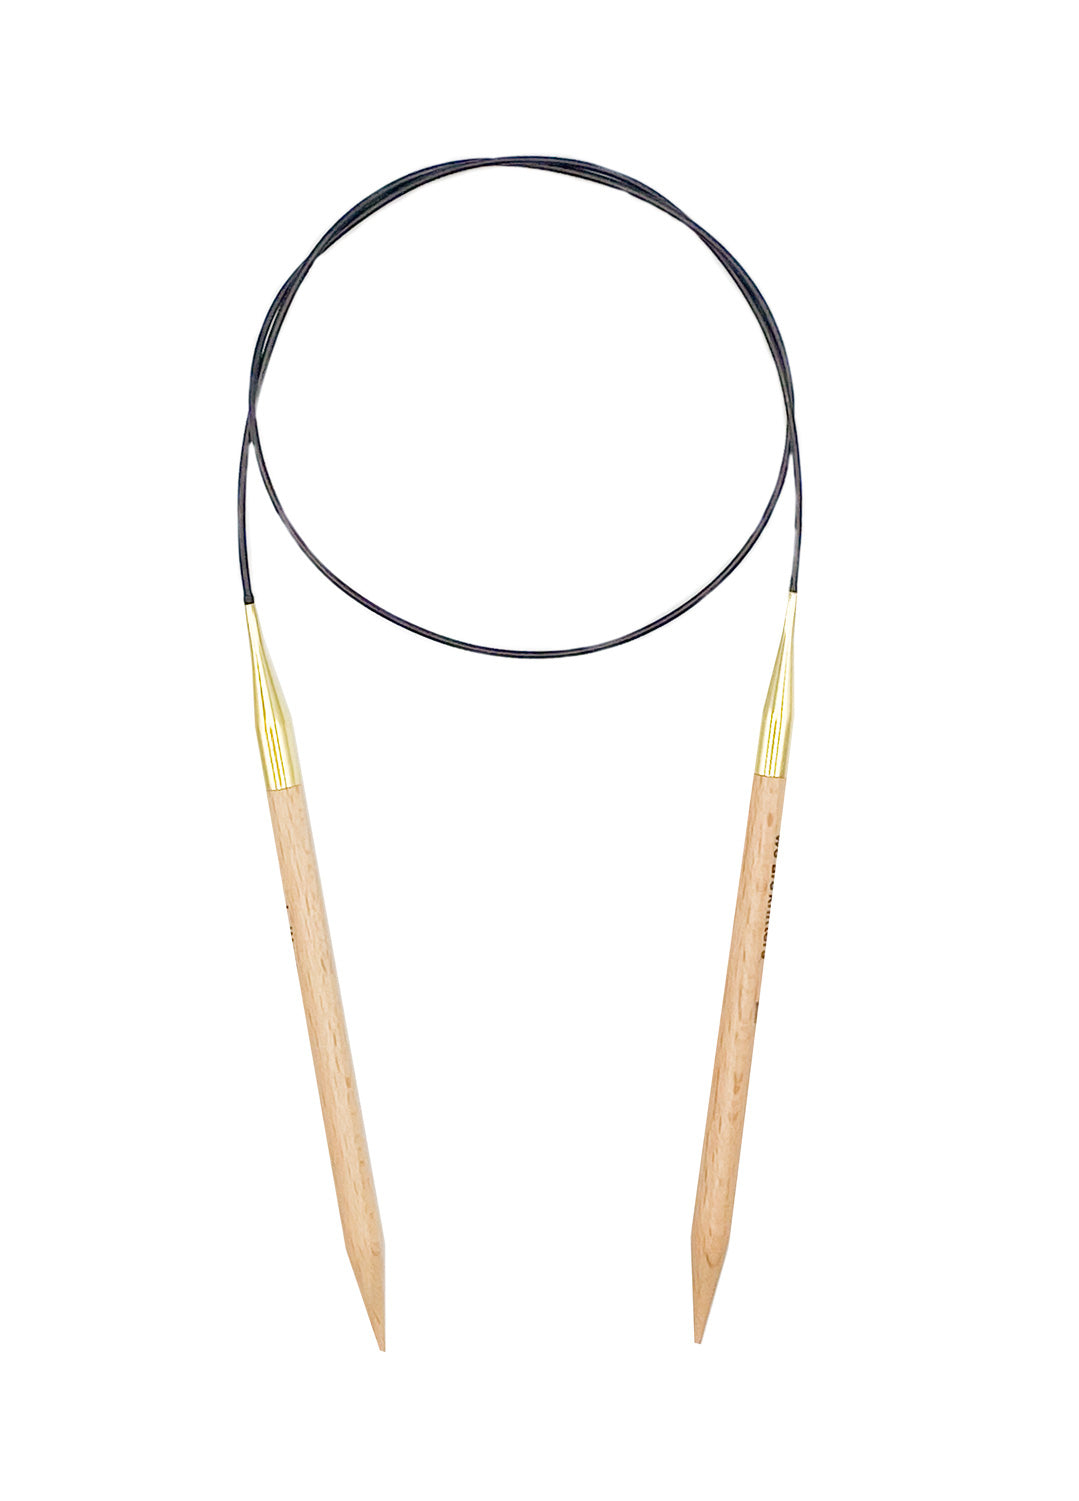 6mm Circular Beechwood Knitting Needles – weareknitters